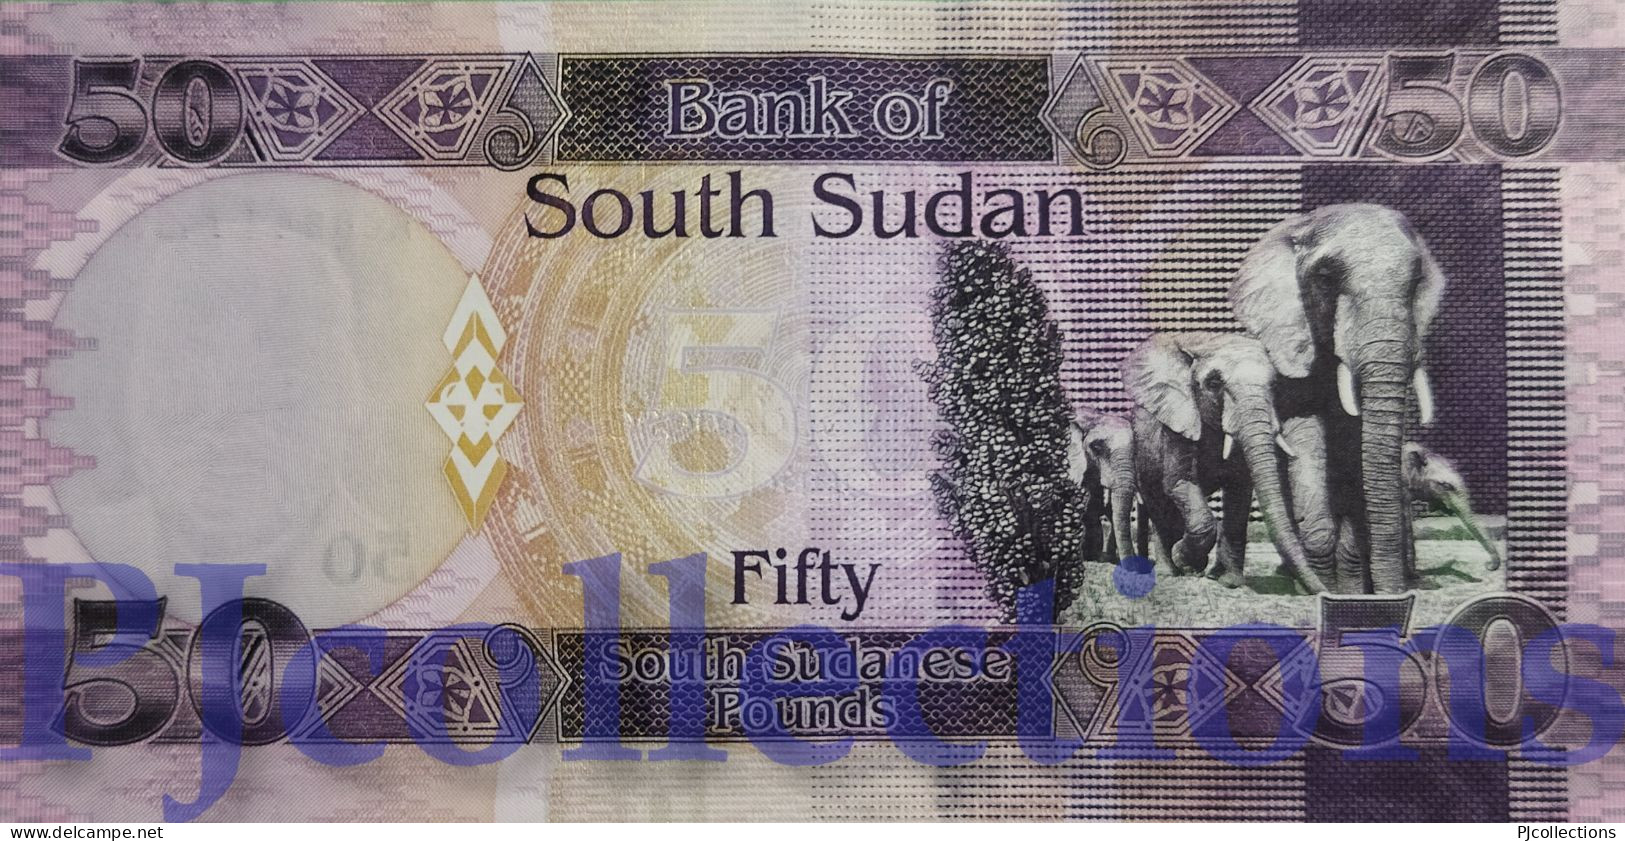 SOUTH SUDAN 50 POUNDS 2011 PICK 9 UNC - South Sudan